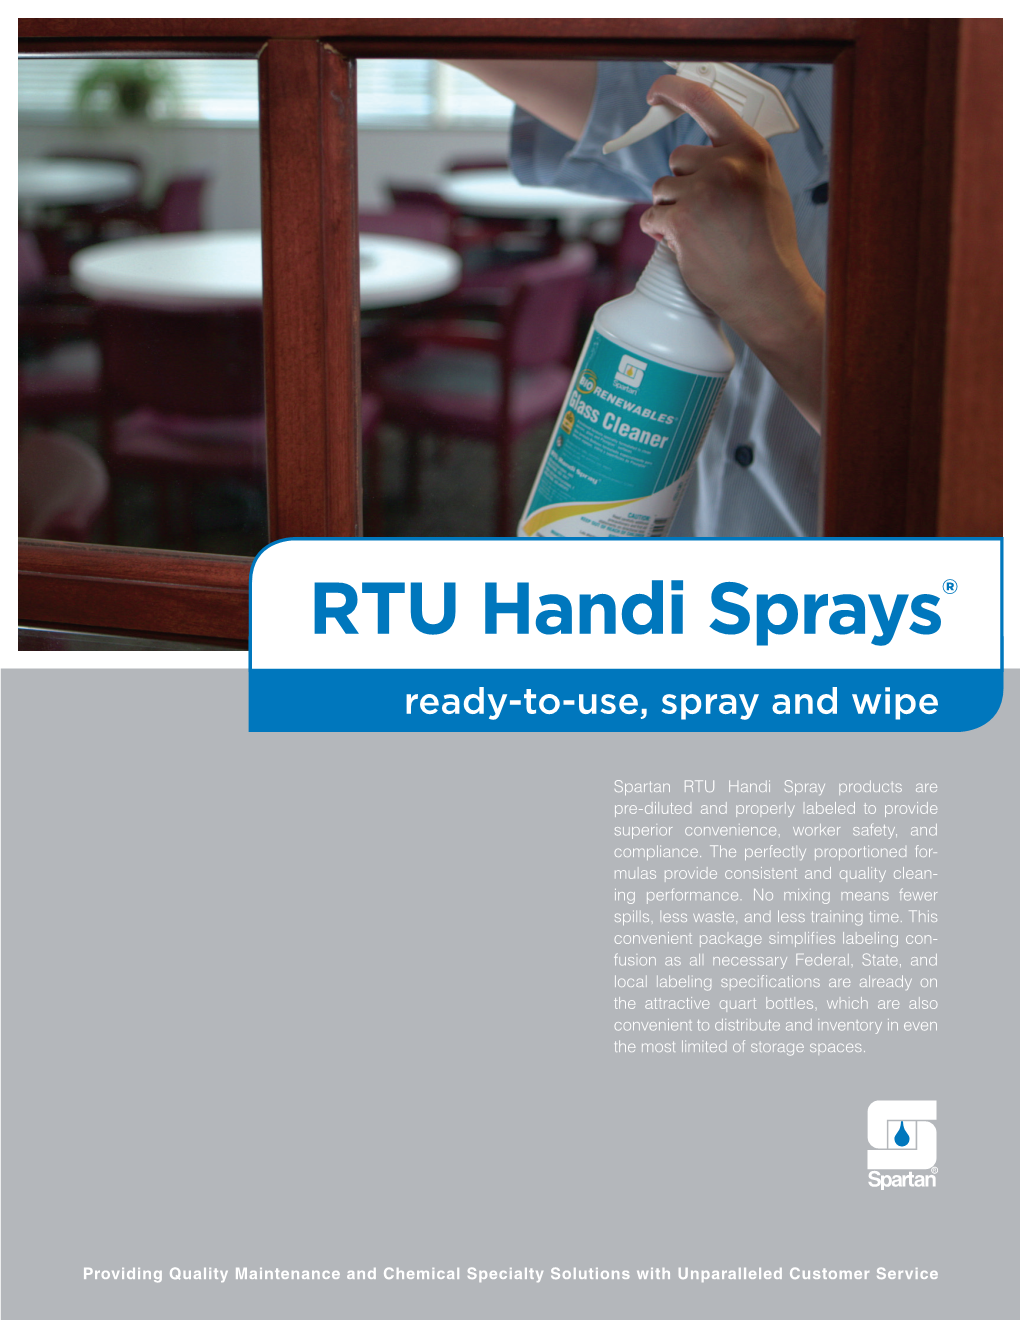 RTU Handi Sprays® Ready-To-Use, Spray and Wipe